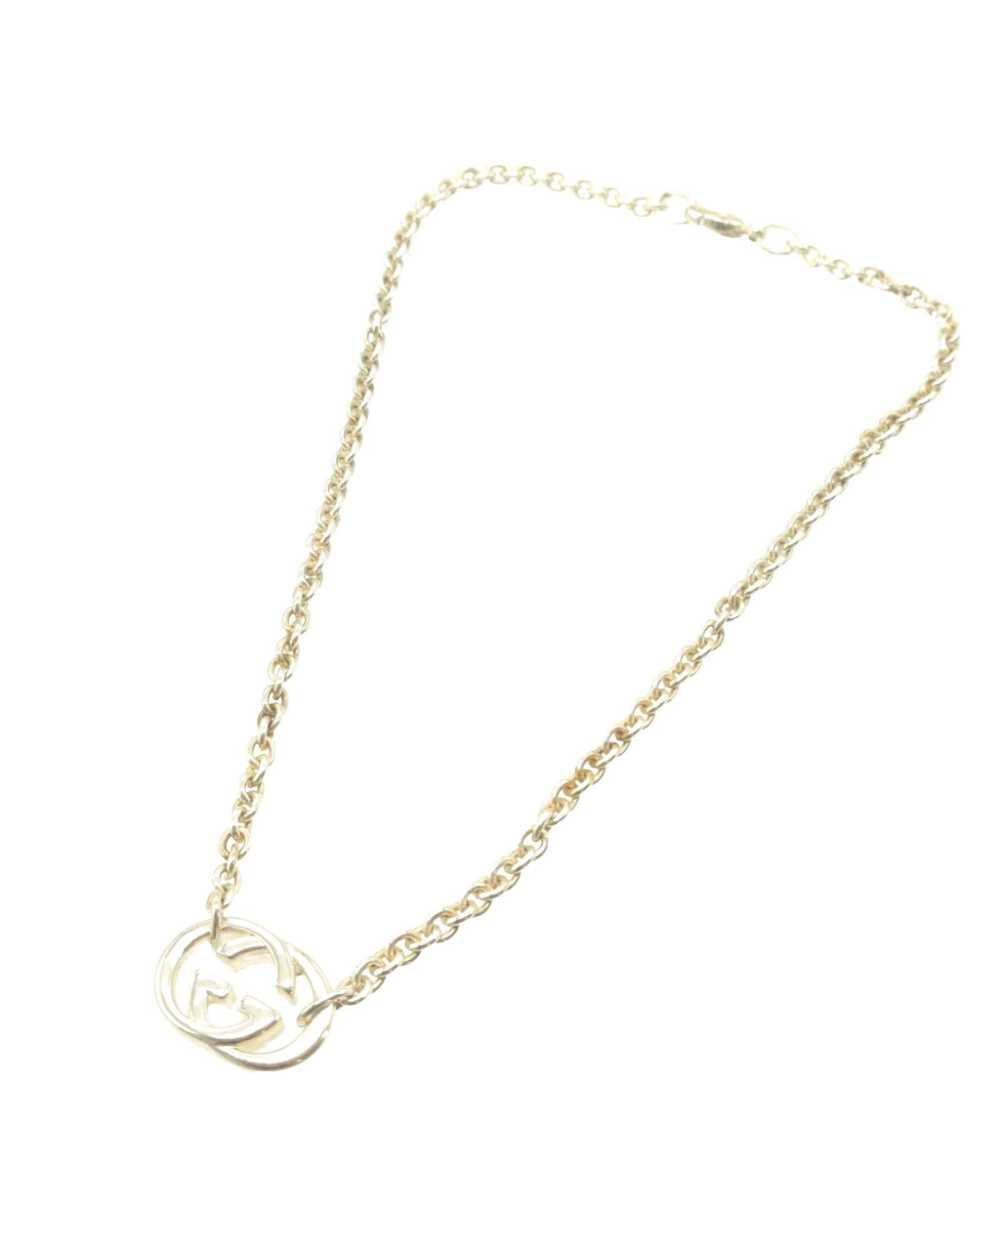 Gucci Interlocking Silver Pendant Necklace - image 1